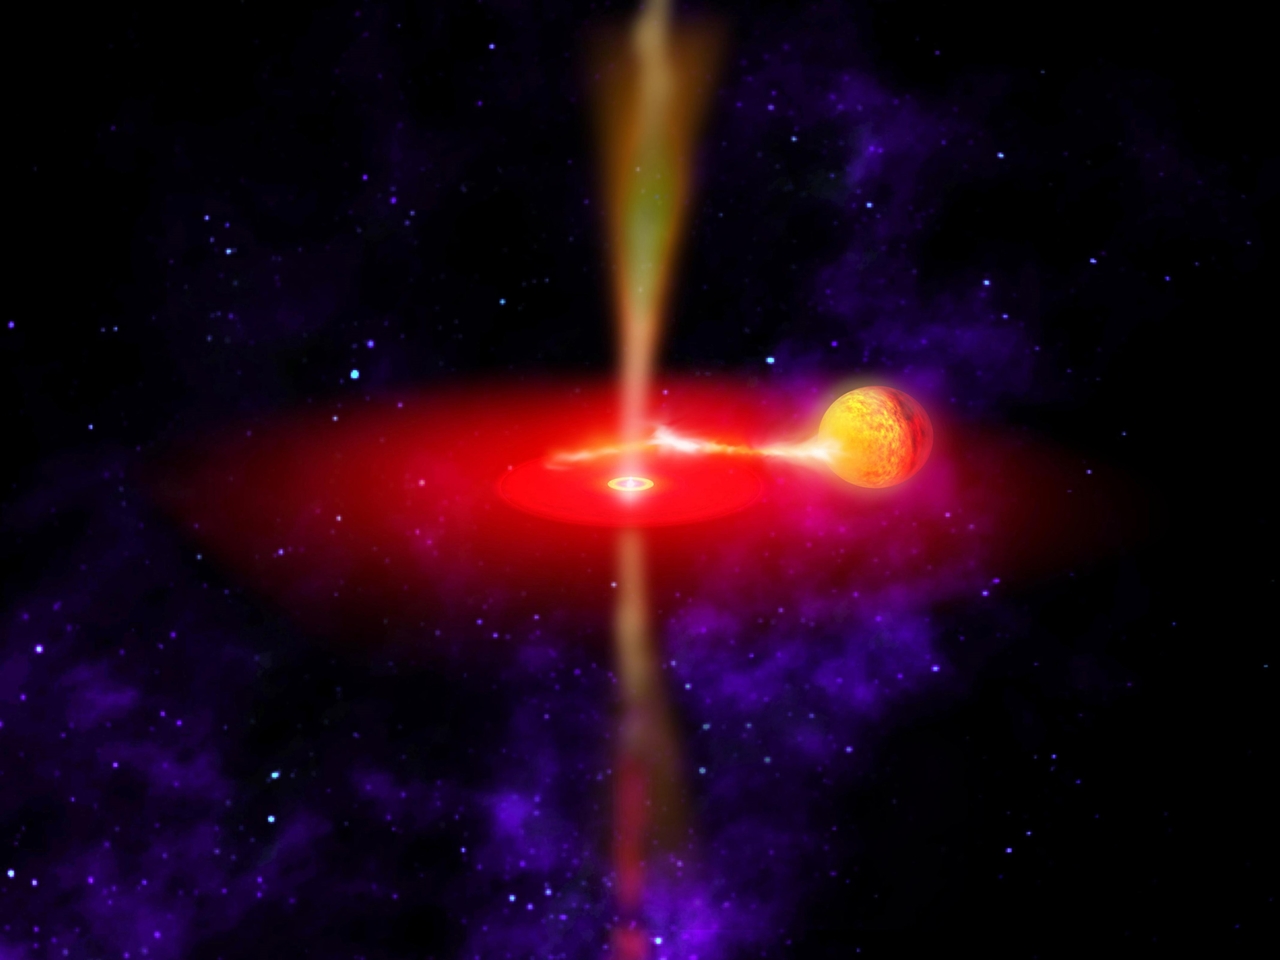 Supermassive black holes 21